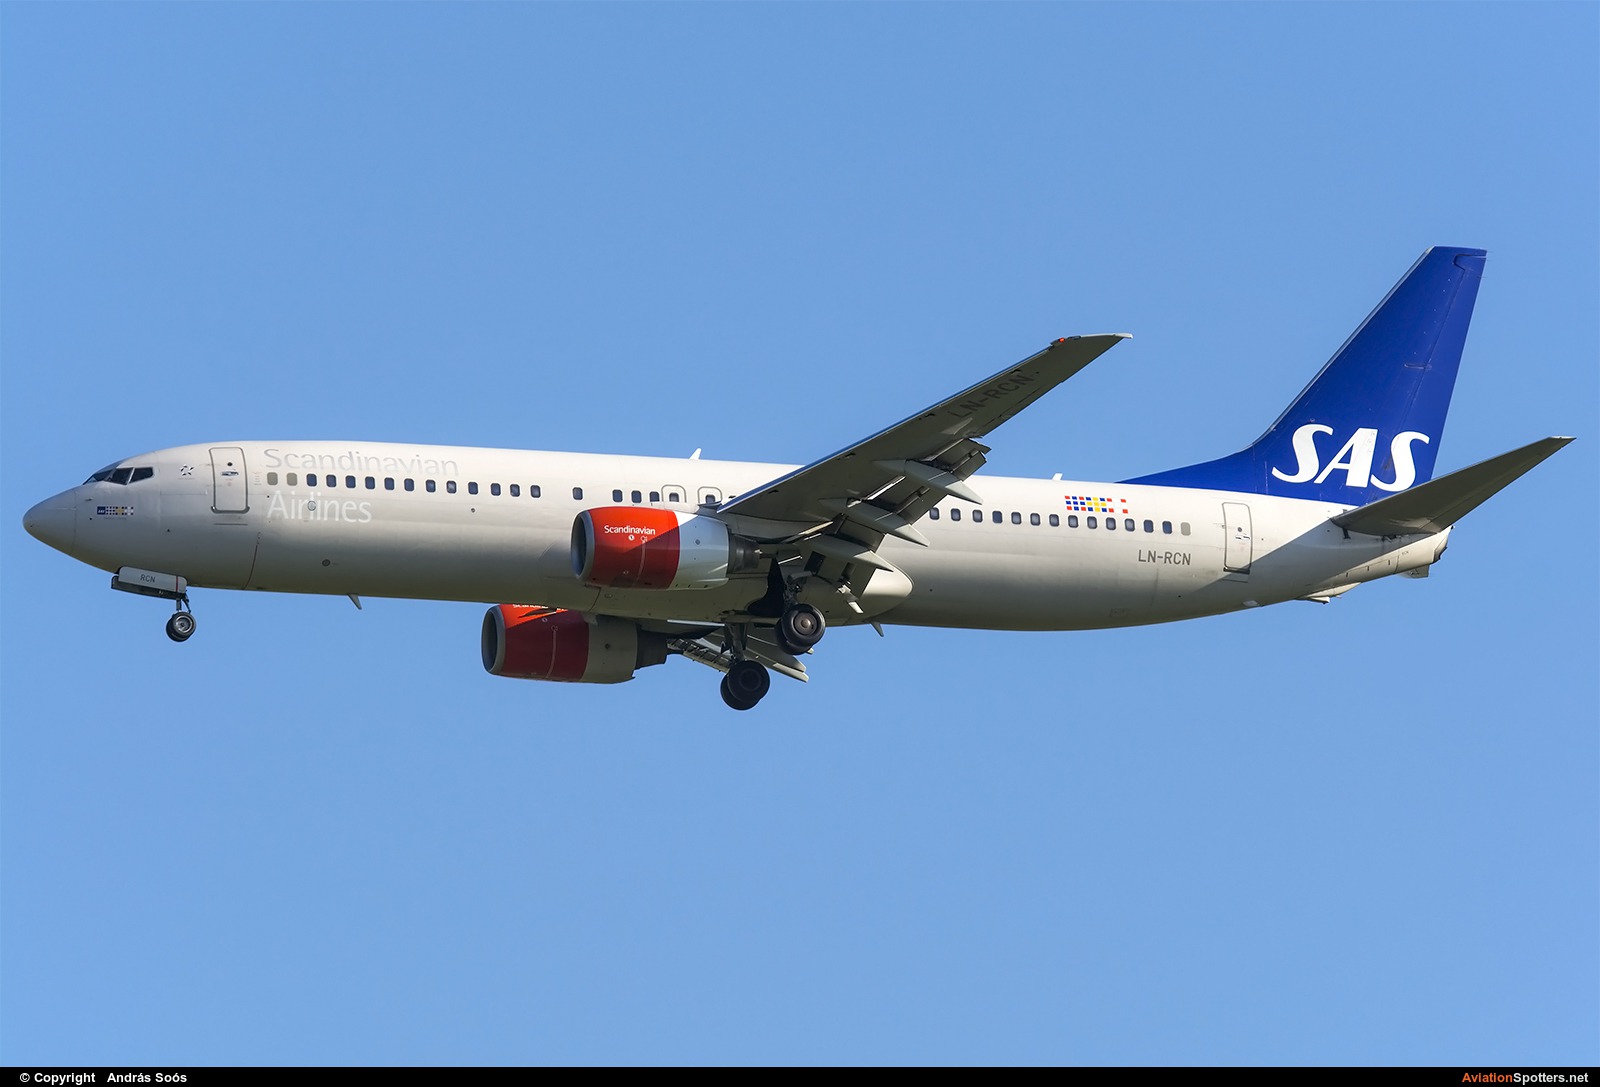 SAS - Scandinavian Airlines  -  737-800  (LN-RCN) By András Soós (sas1965)